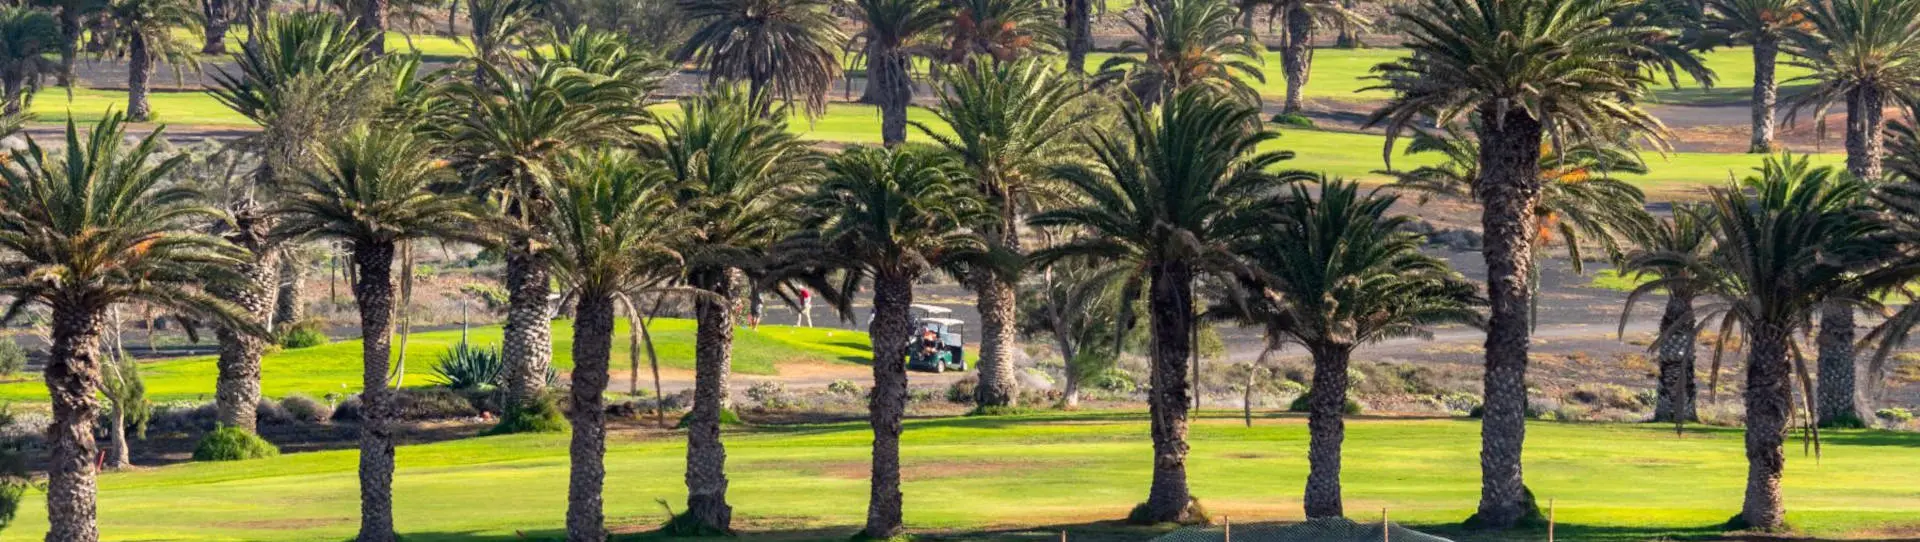 Spain golf courses - Golf Costa Teguise - Photo 2